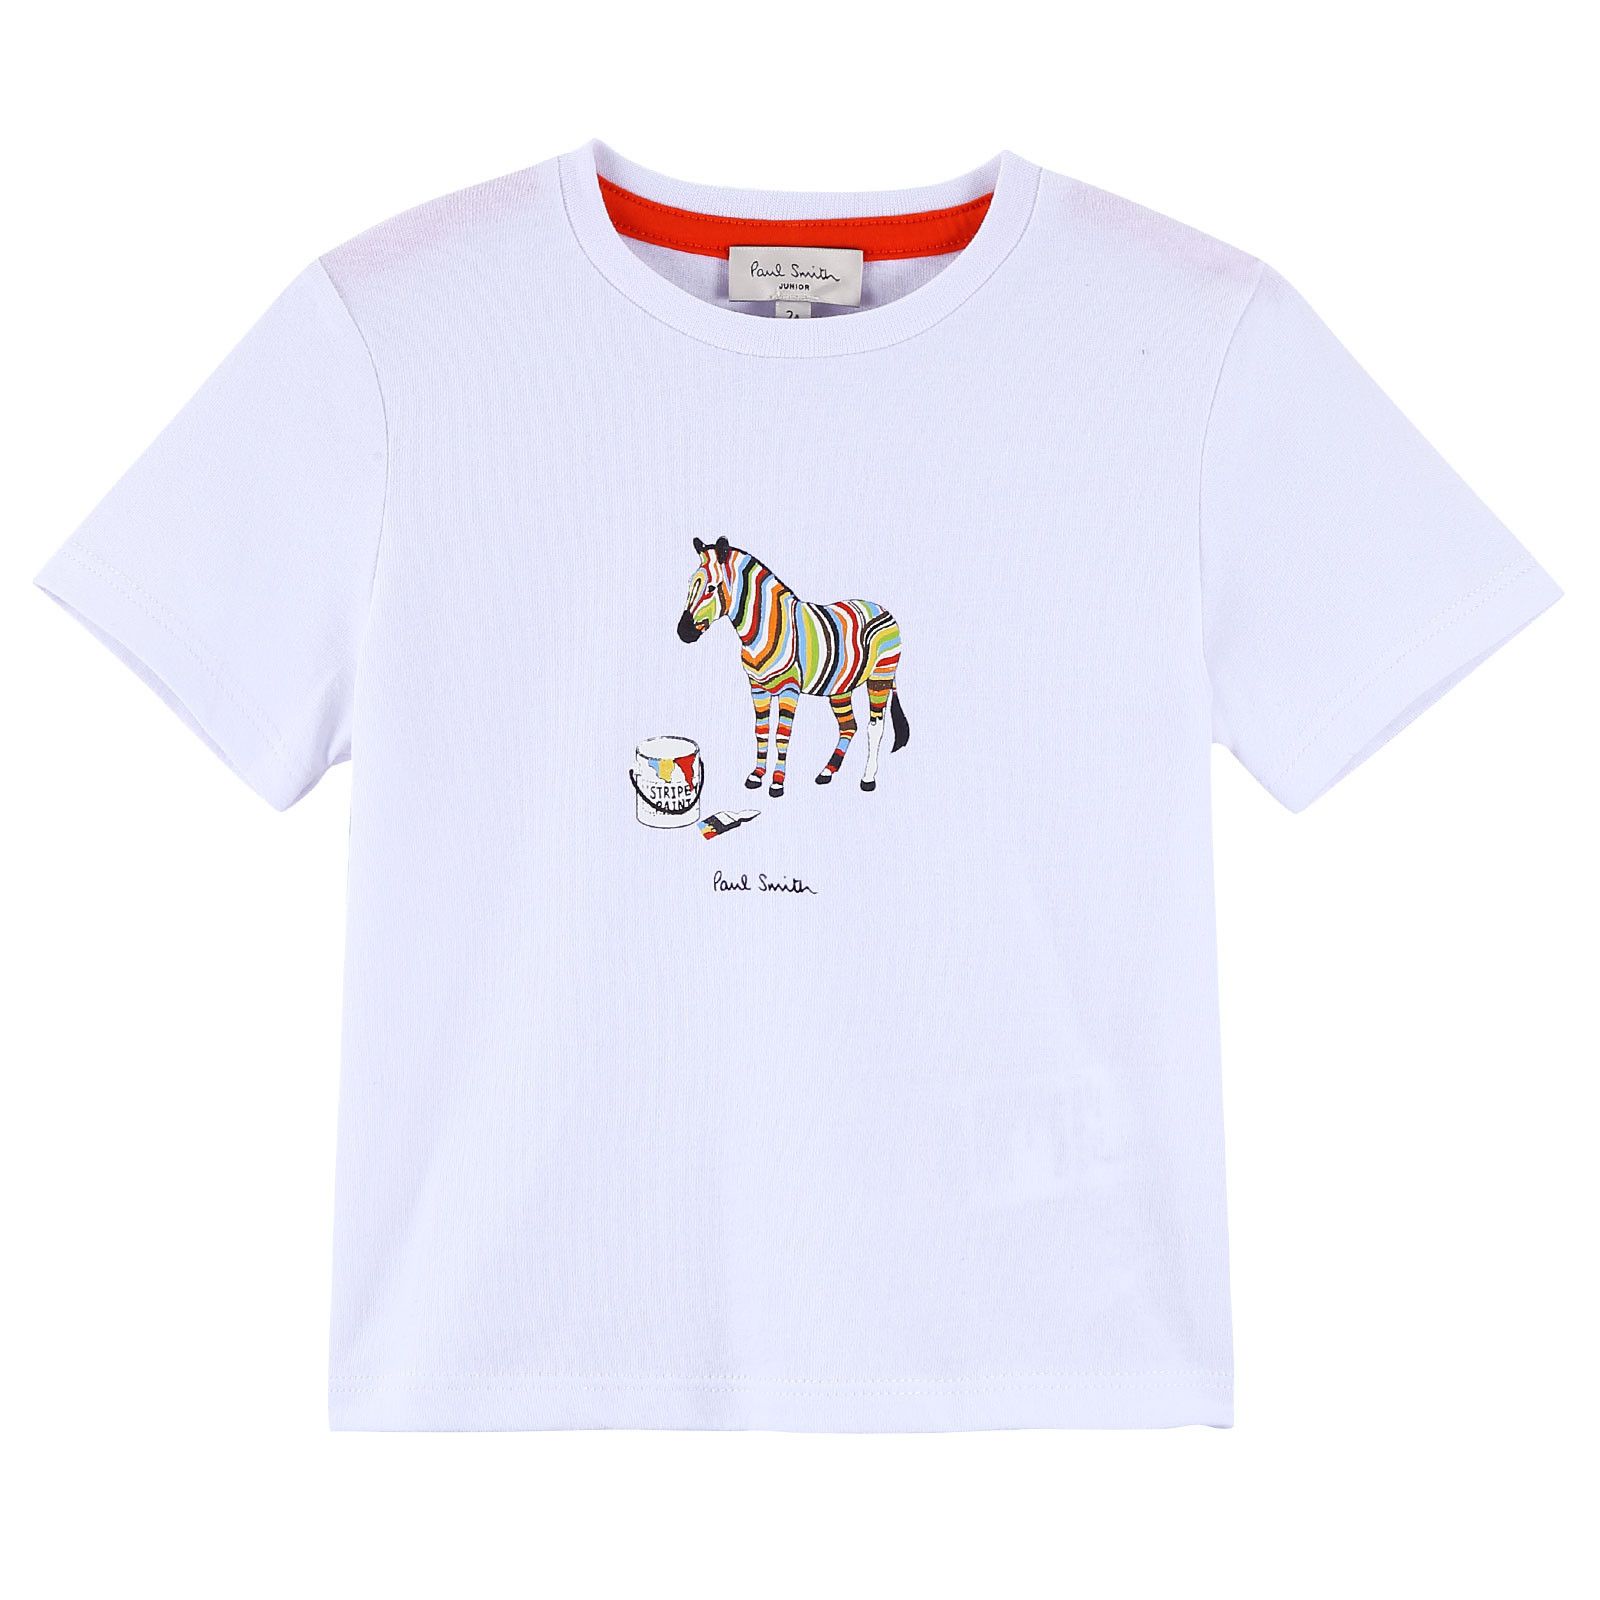 Boys White Cotton T-Shirt With Multicolor Horse Print - CÉMAROSE | Children's Fashion Store - 1